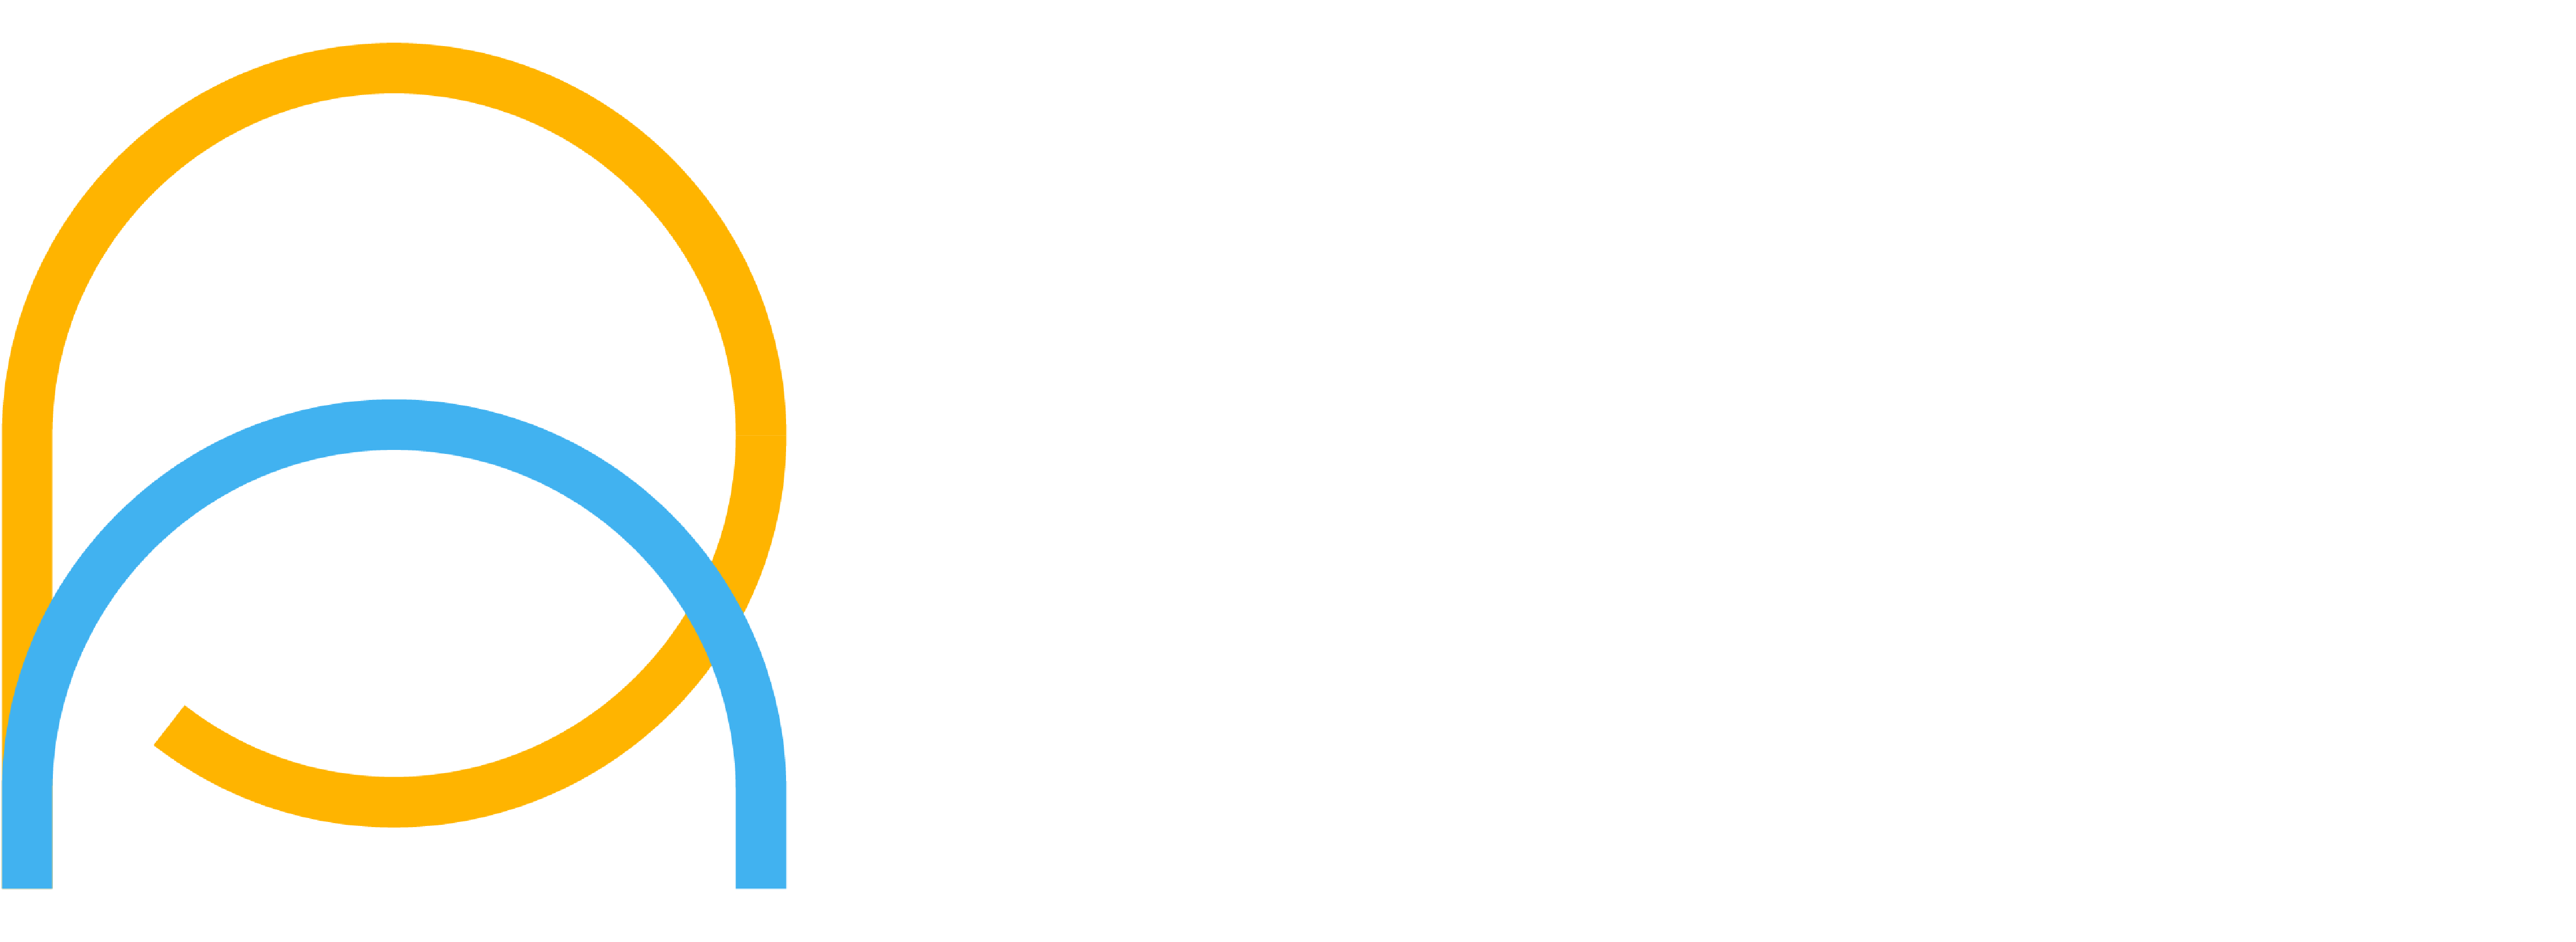 Northern Polytunnels